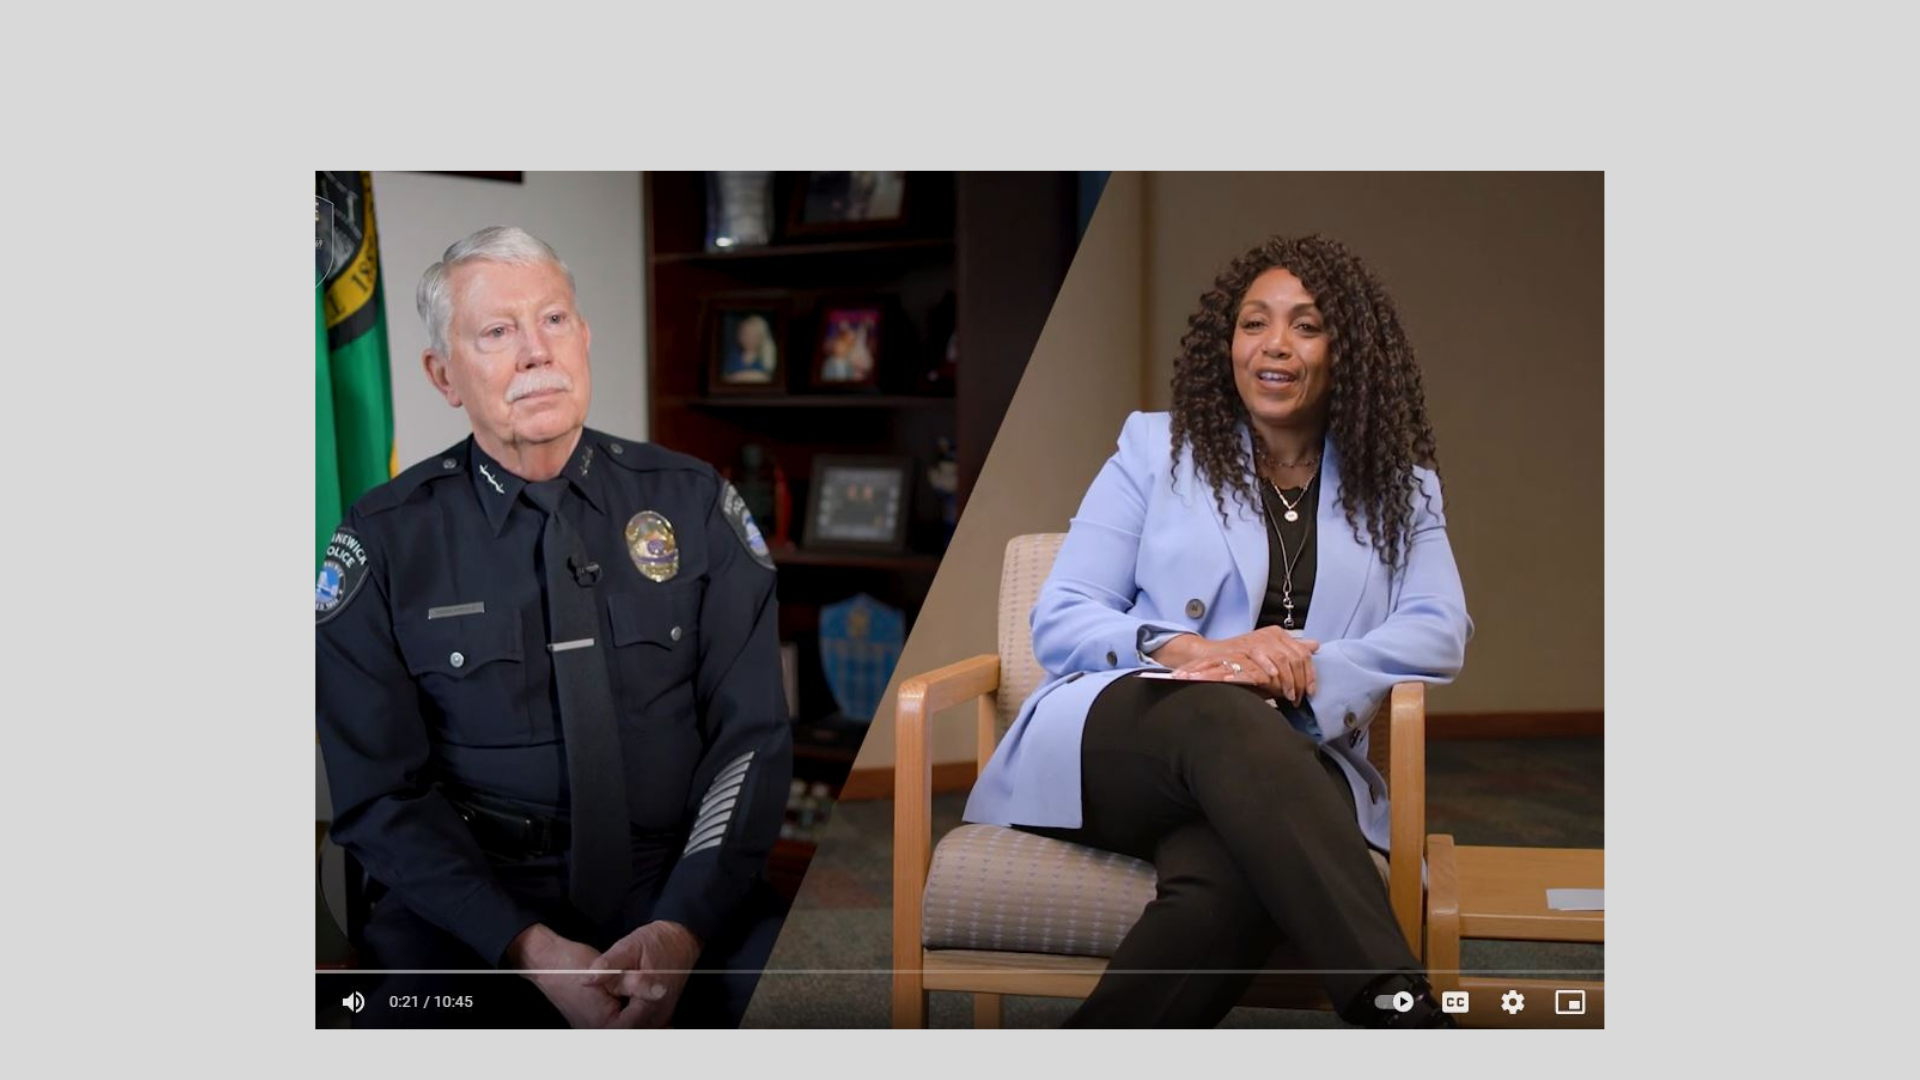 Enlightening Conversations : Community Policing As The Focus